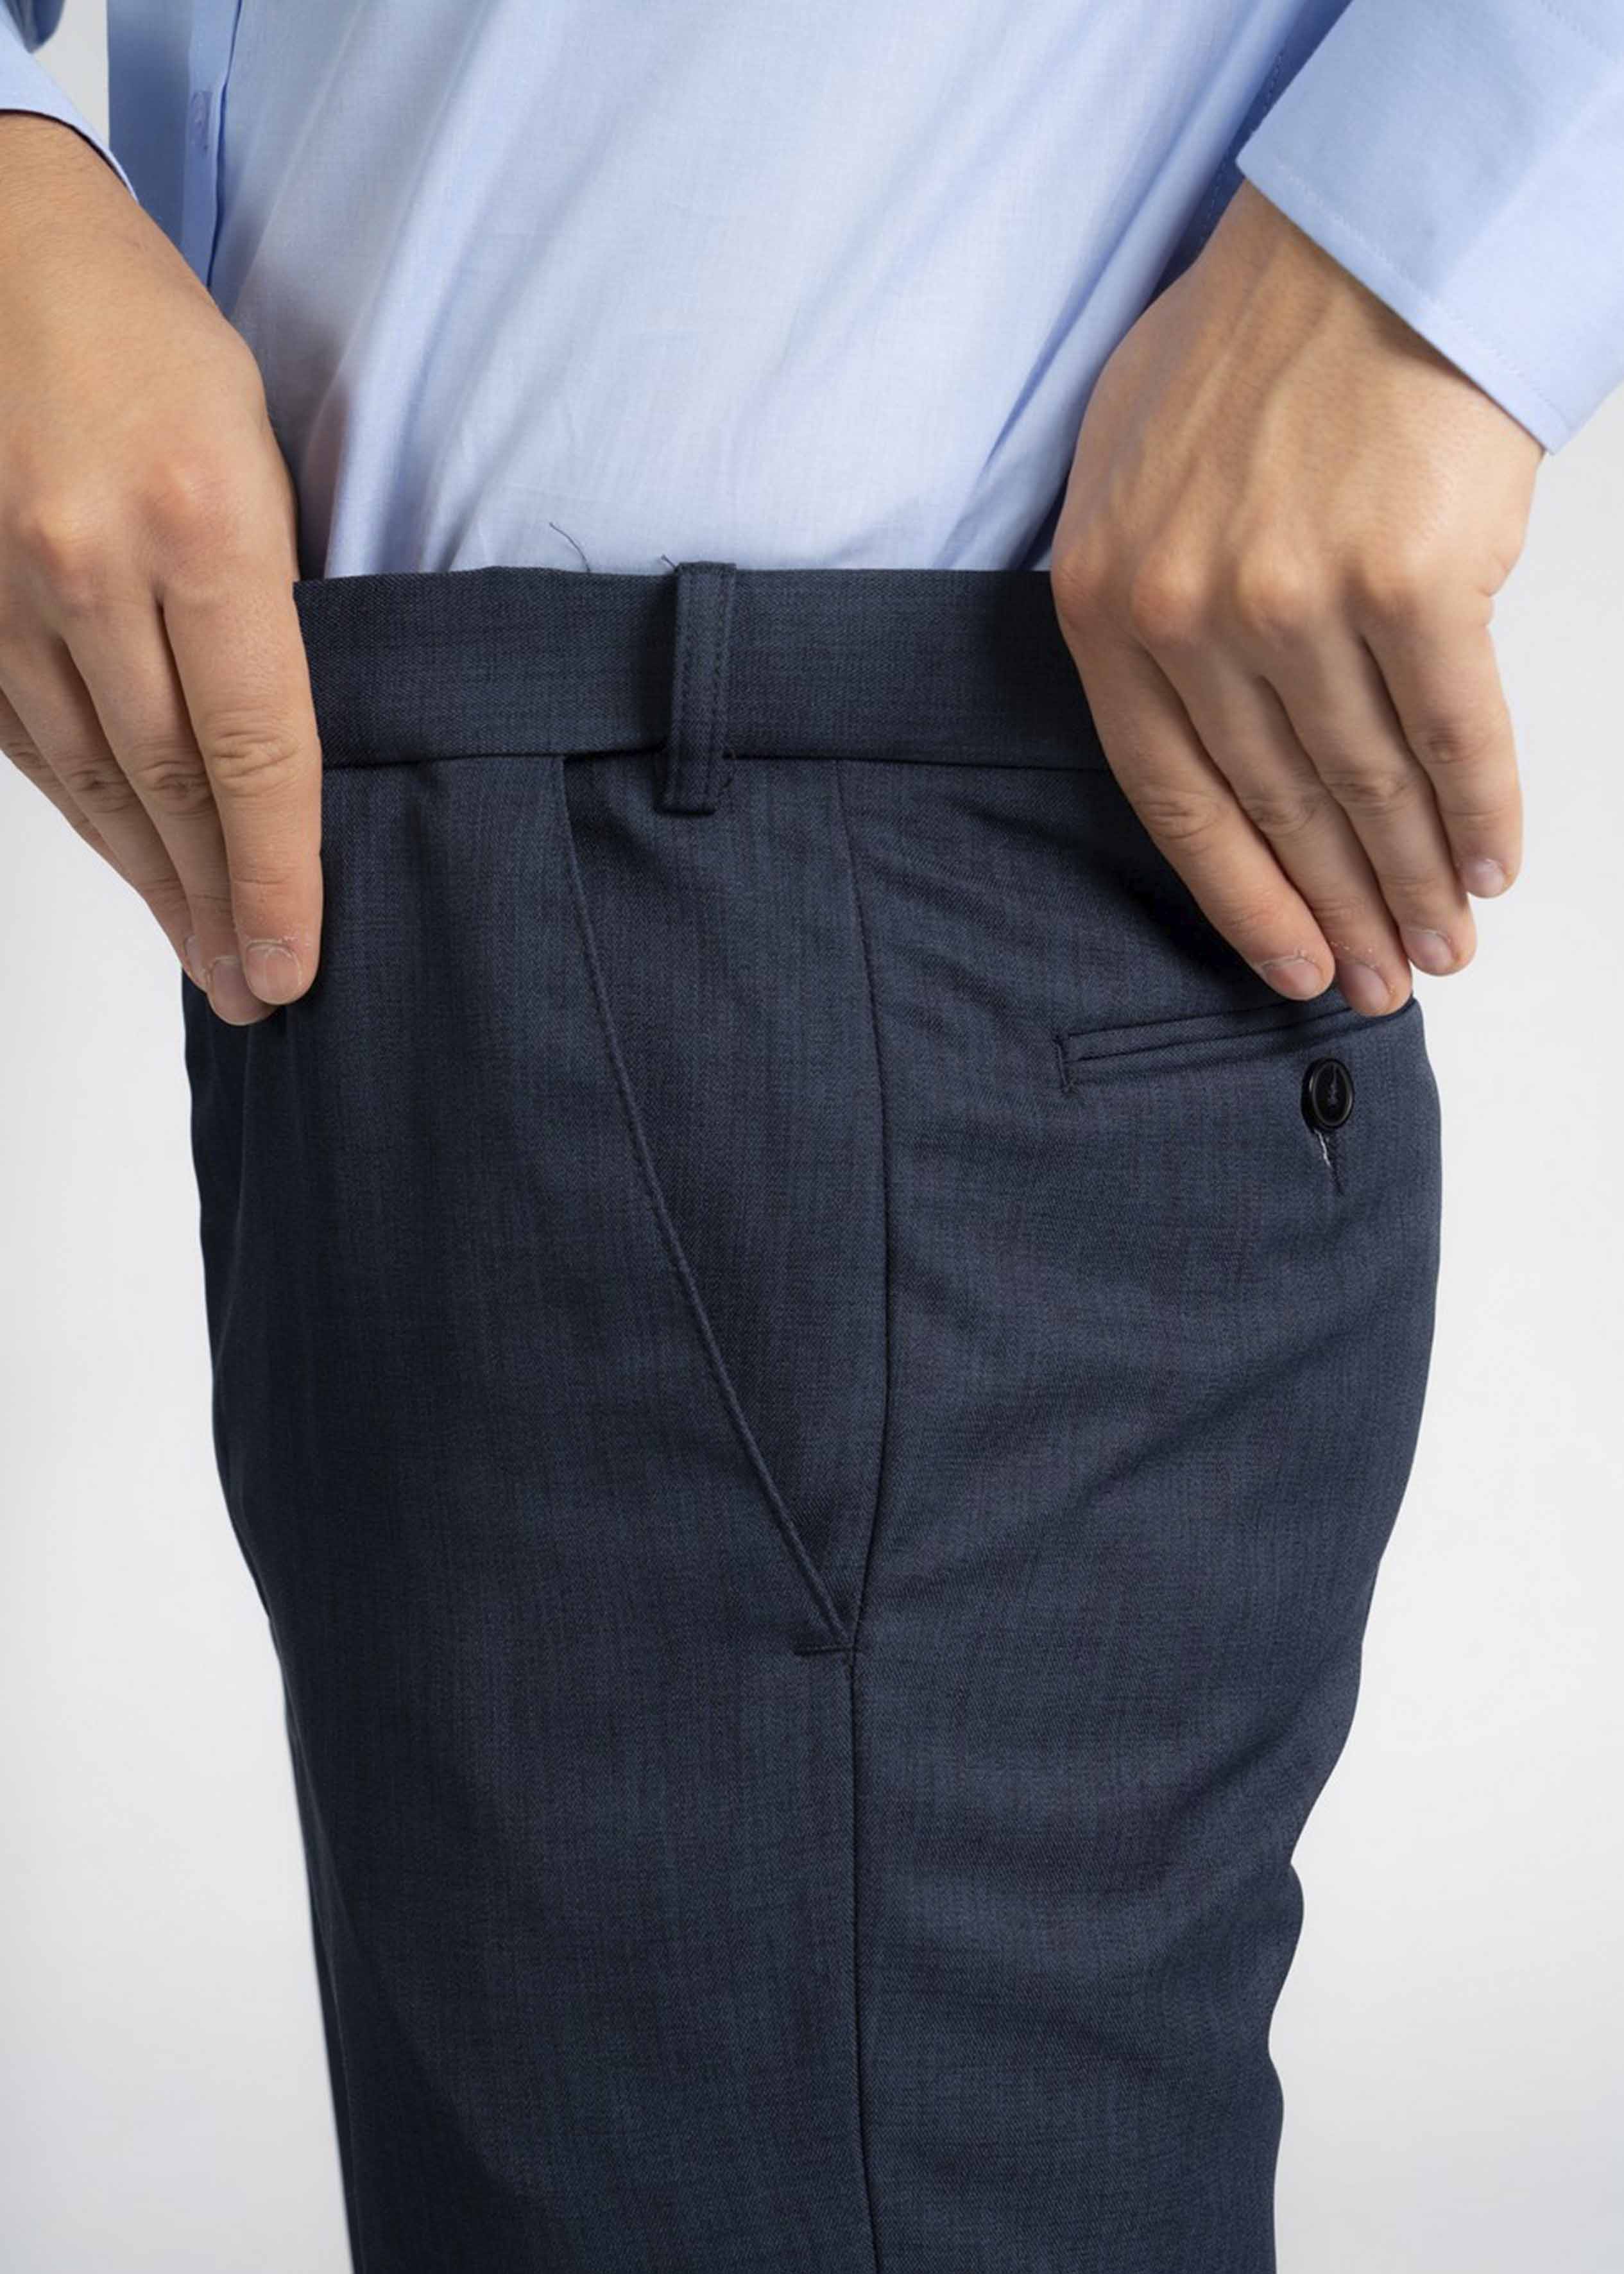 2 Pack Men's Smart VELCRO® Brand Fastening Trousers Bundle - Navy/Grey